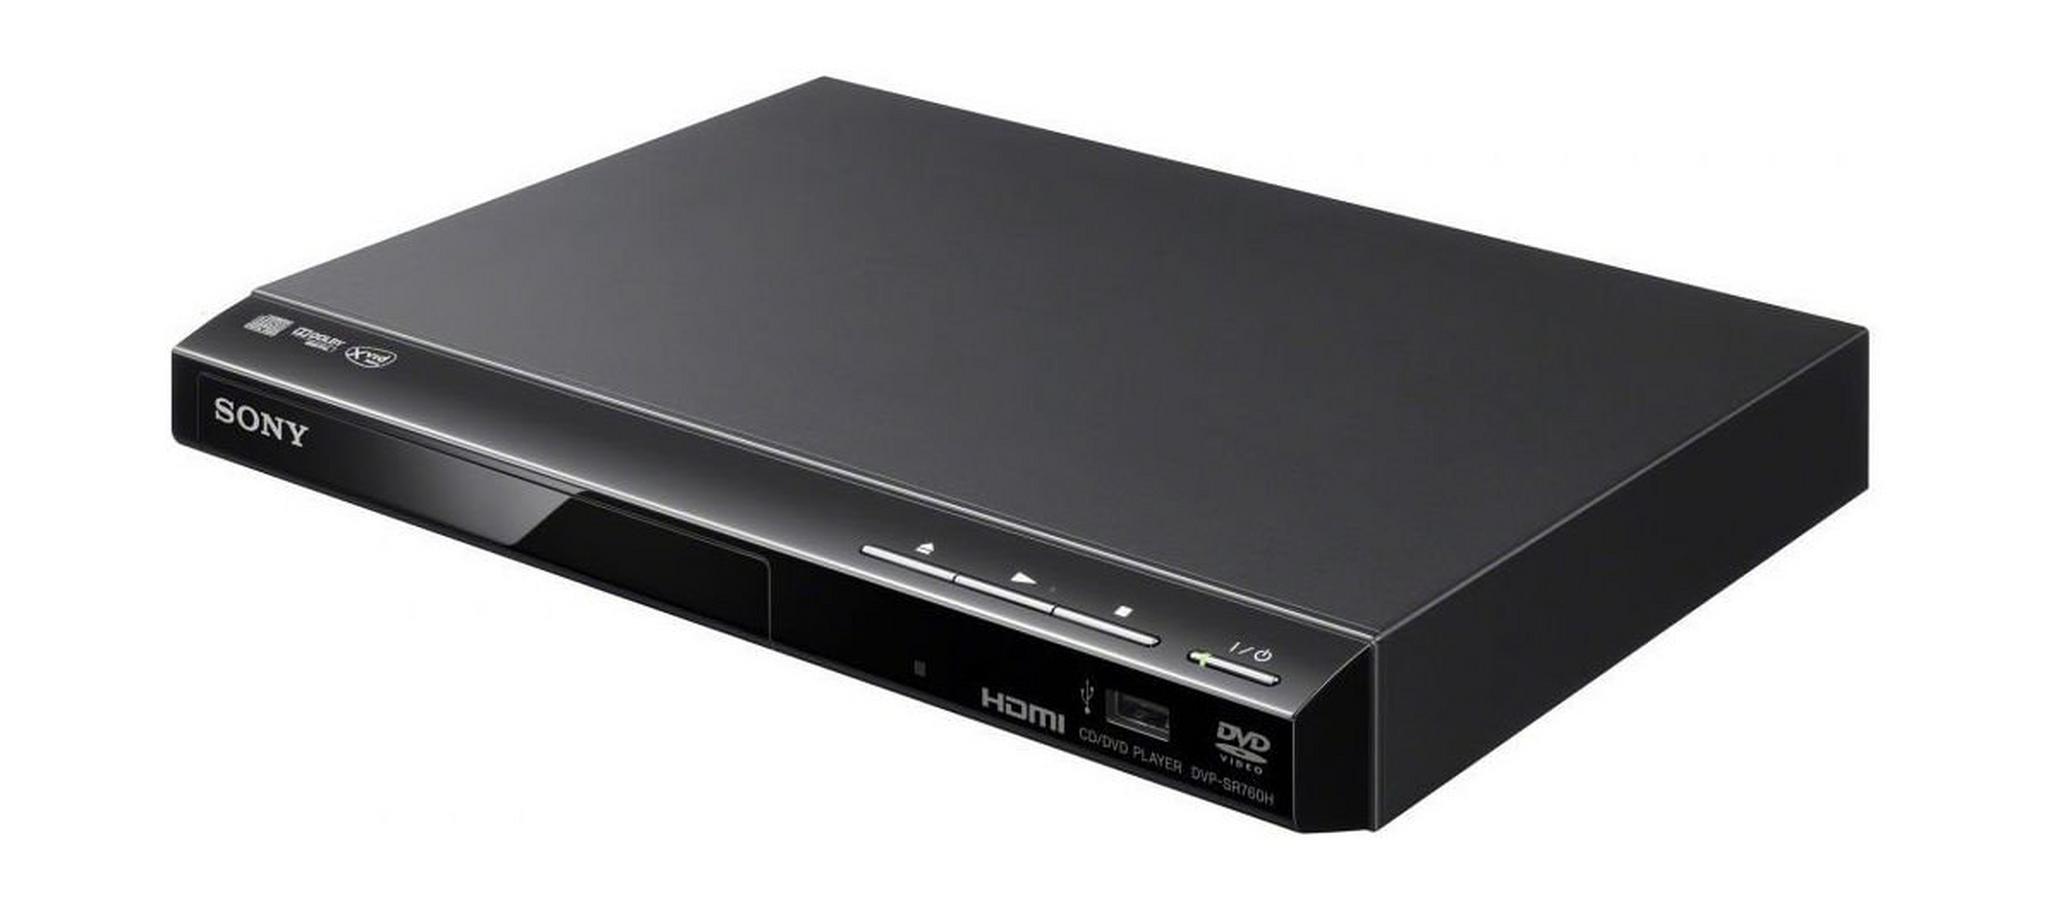 Sony HDMI USB DVD Player (DVP-SR760) - Black